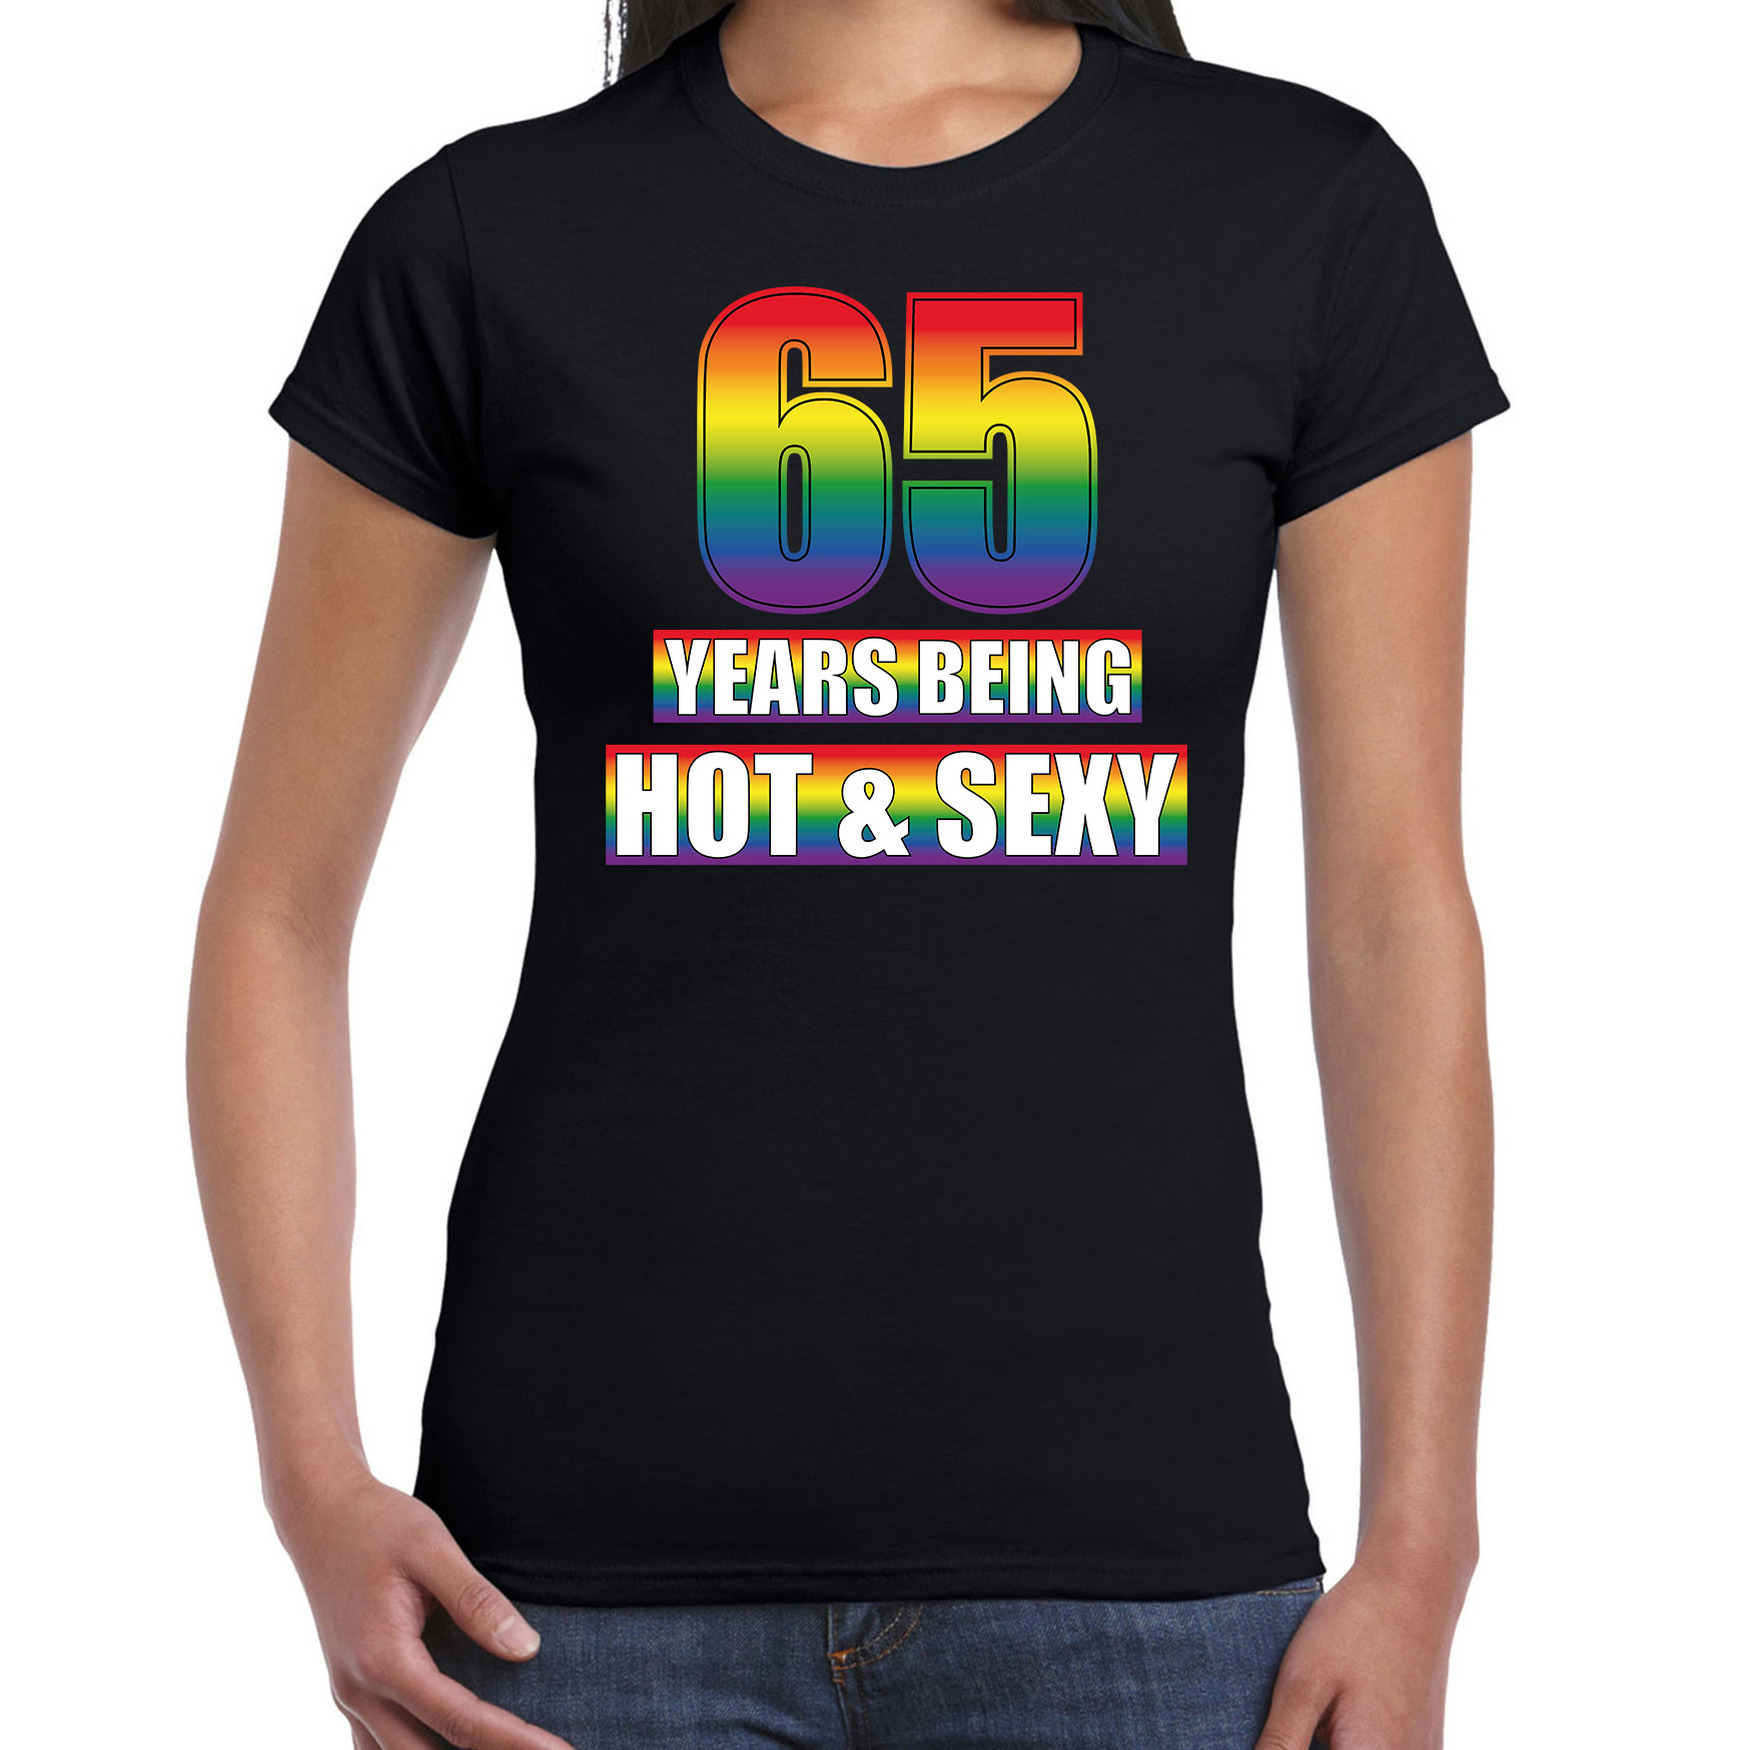 Hot en sexy 65 jaar verjaardag cadeau t-shirt zwart voor dames Gay- LHBT kleding-outfit